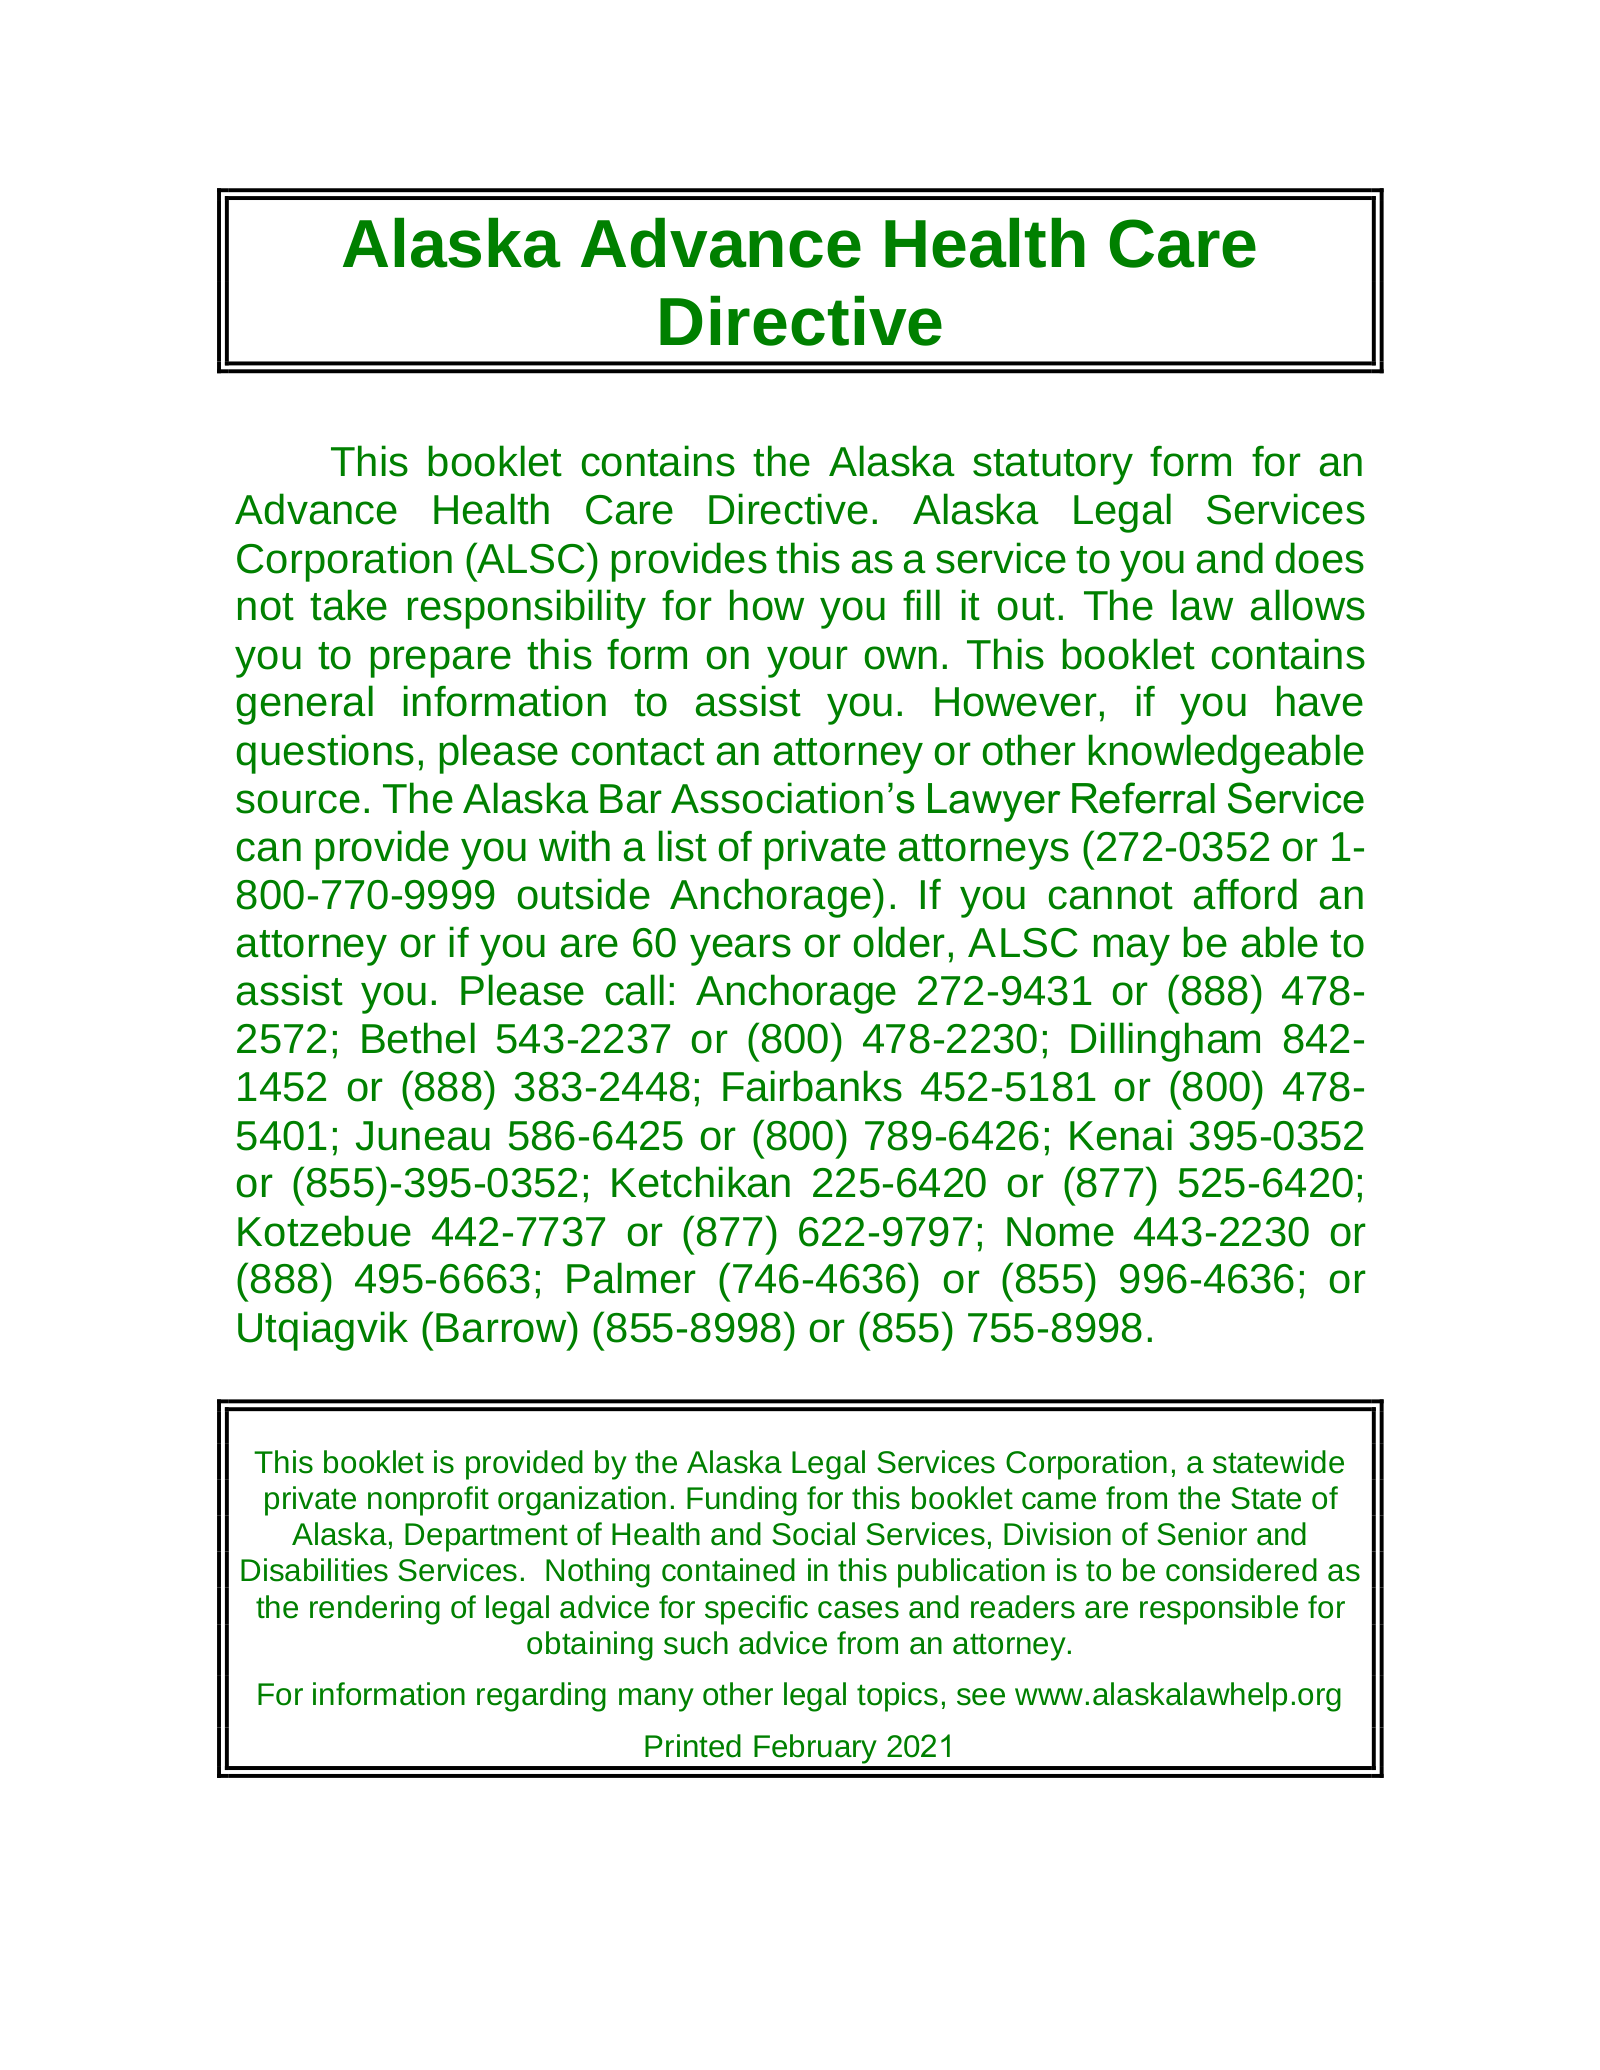 Alaska Advance Health Care Directive Form